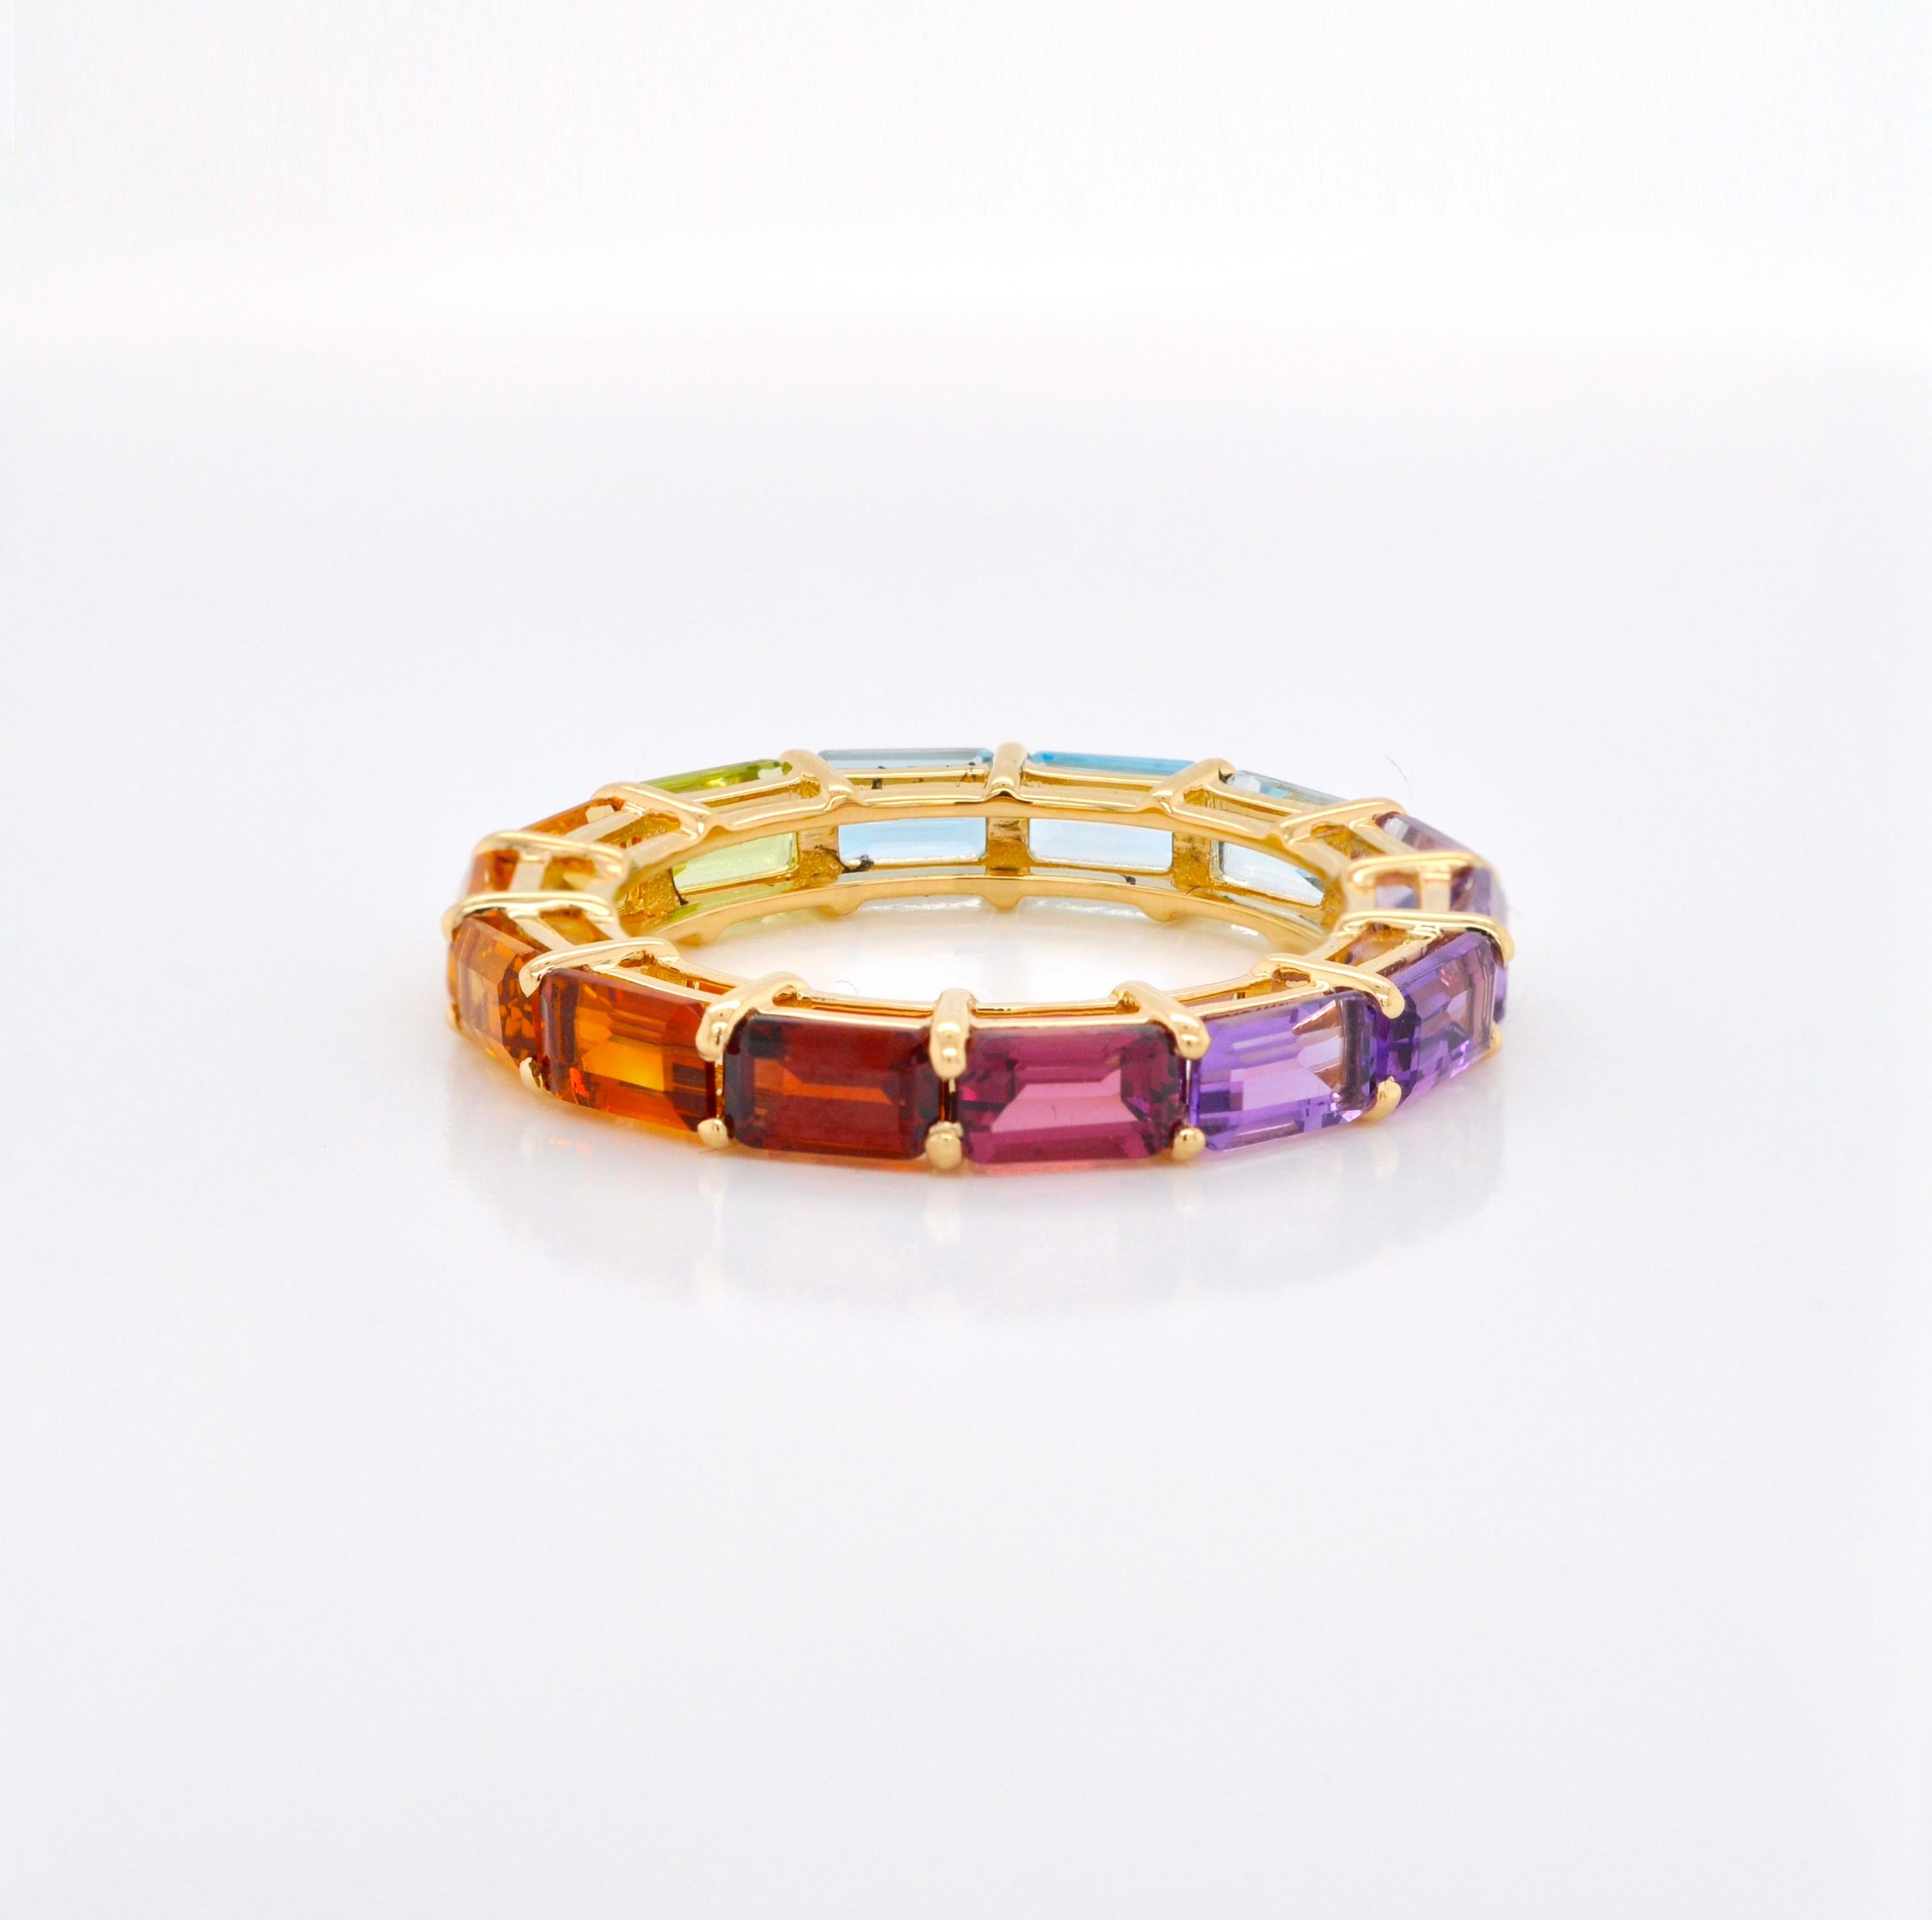 En vente :  Anneau d'éternité en or 18 carats serti de pierres précieuses octogonales multicolores arc-en-ciel 10